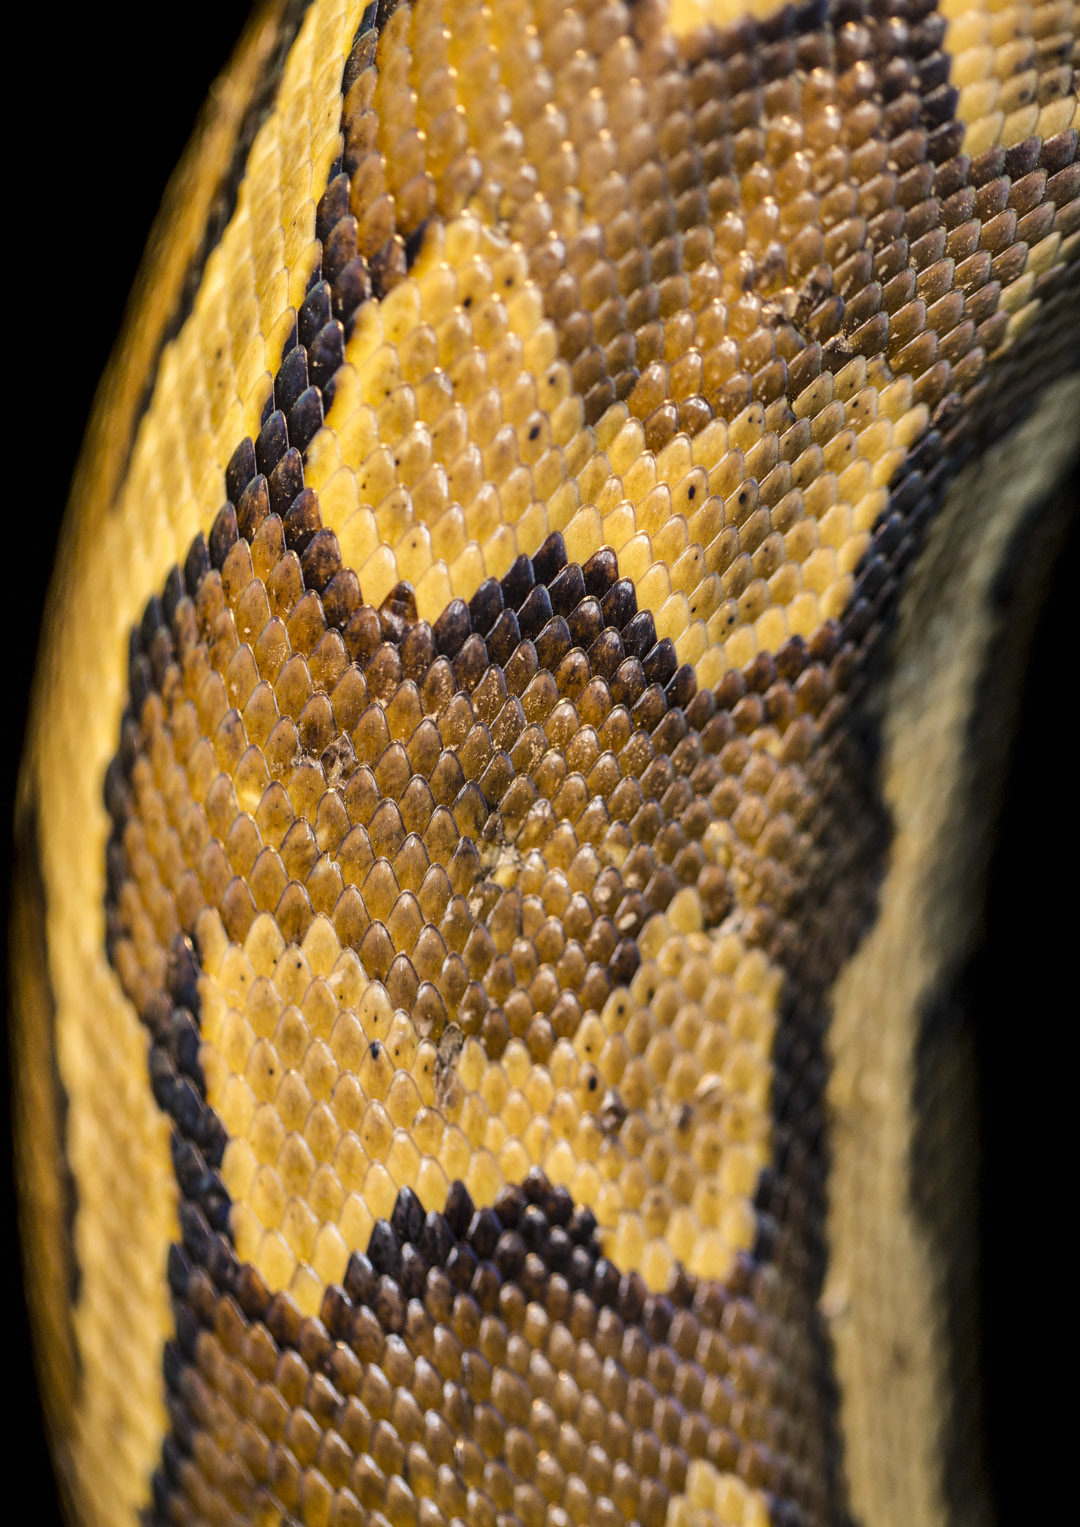 Python Skin